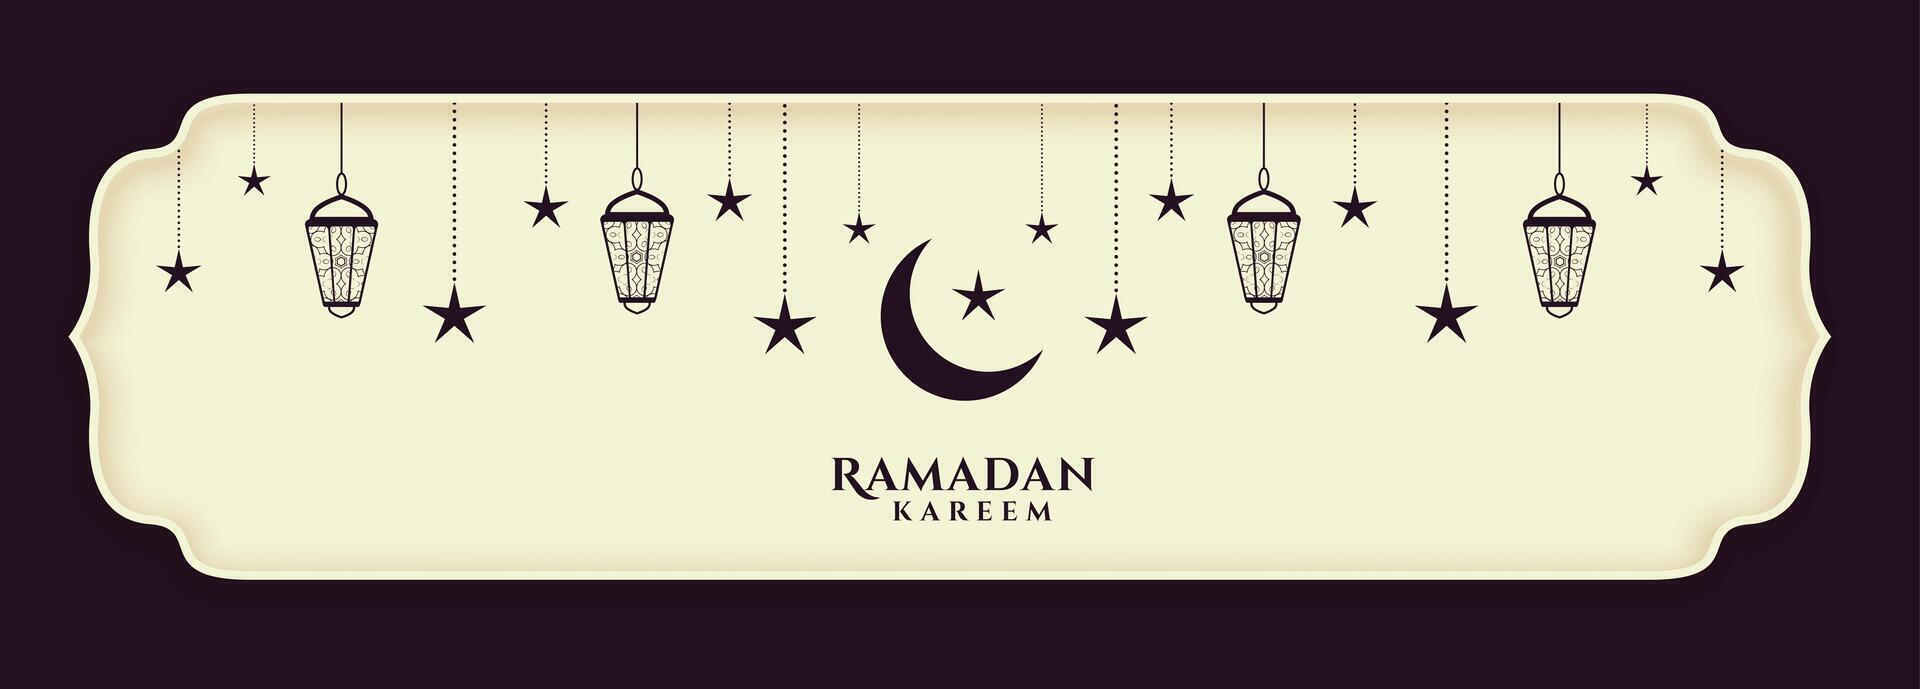 Ramadan kareem Festival dekorativ islamisch Banner Design vektor